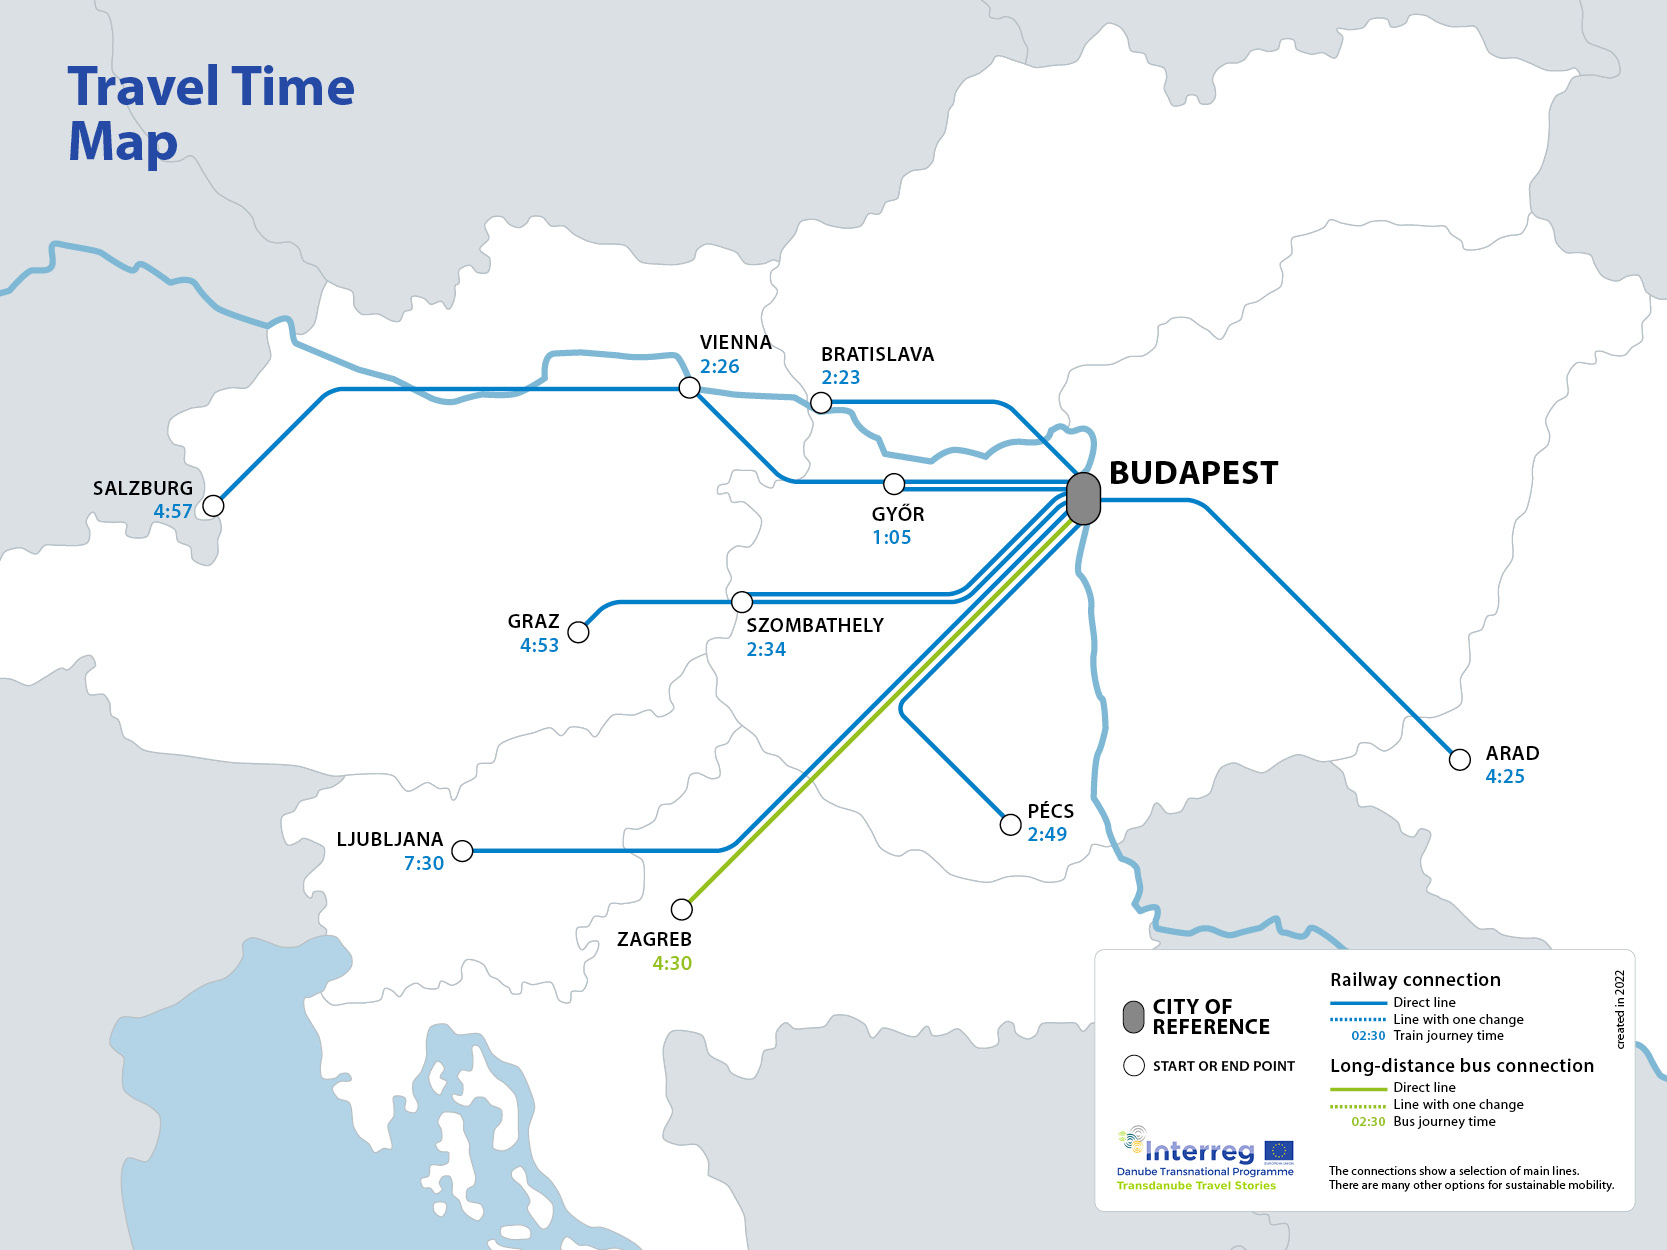 Travel Time Map - Budapest (enlarge image)